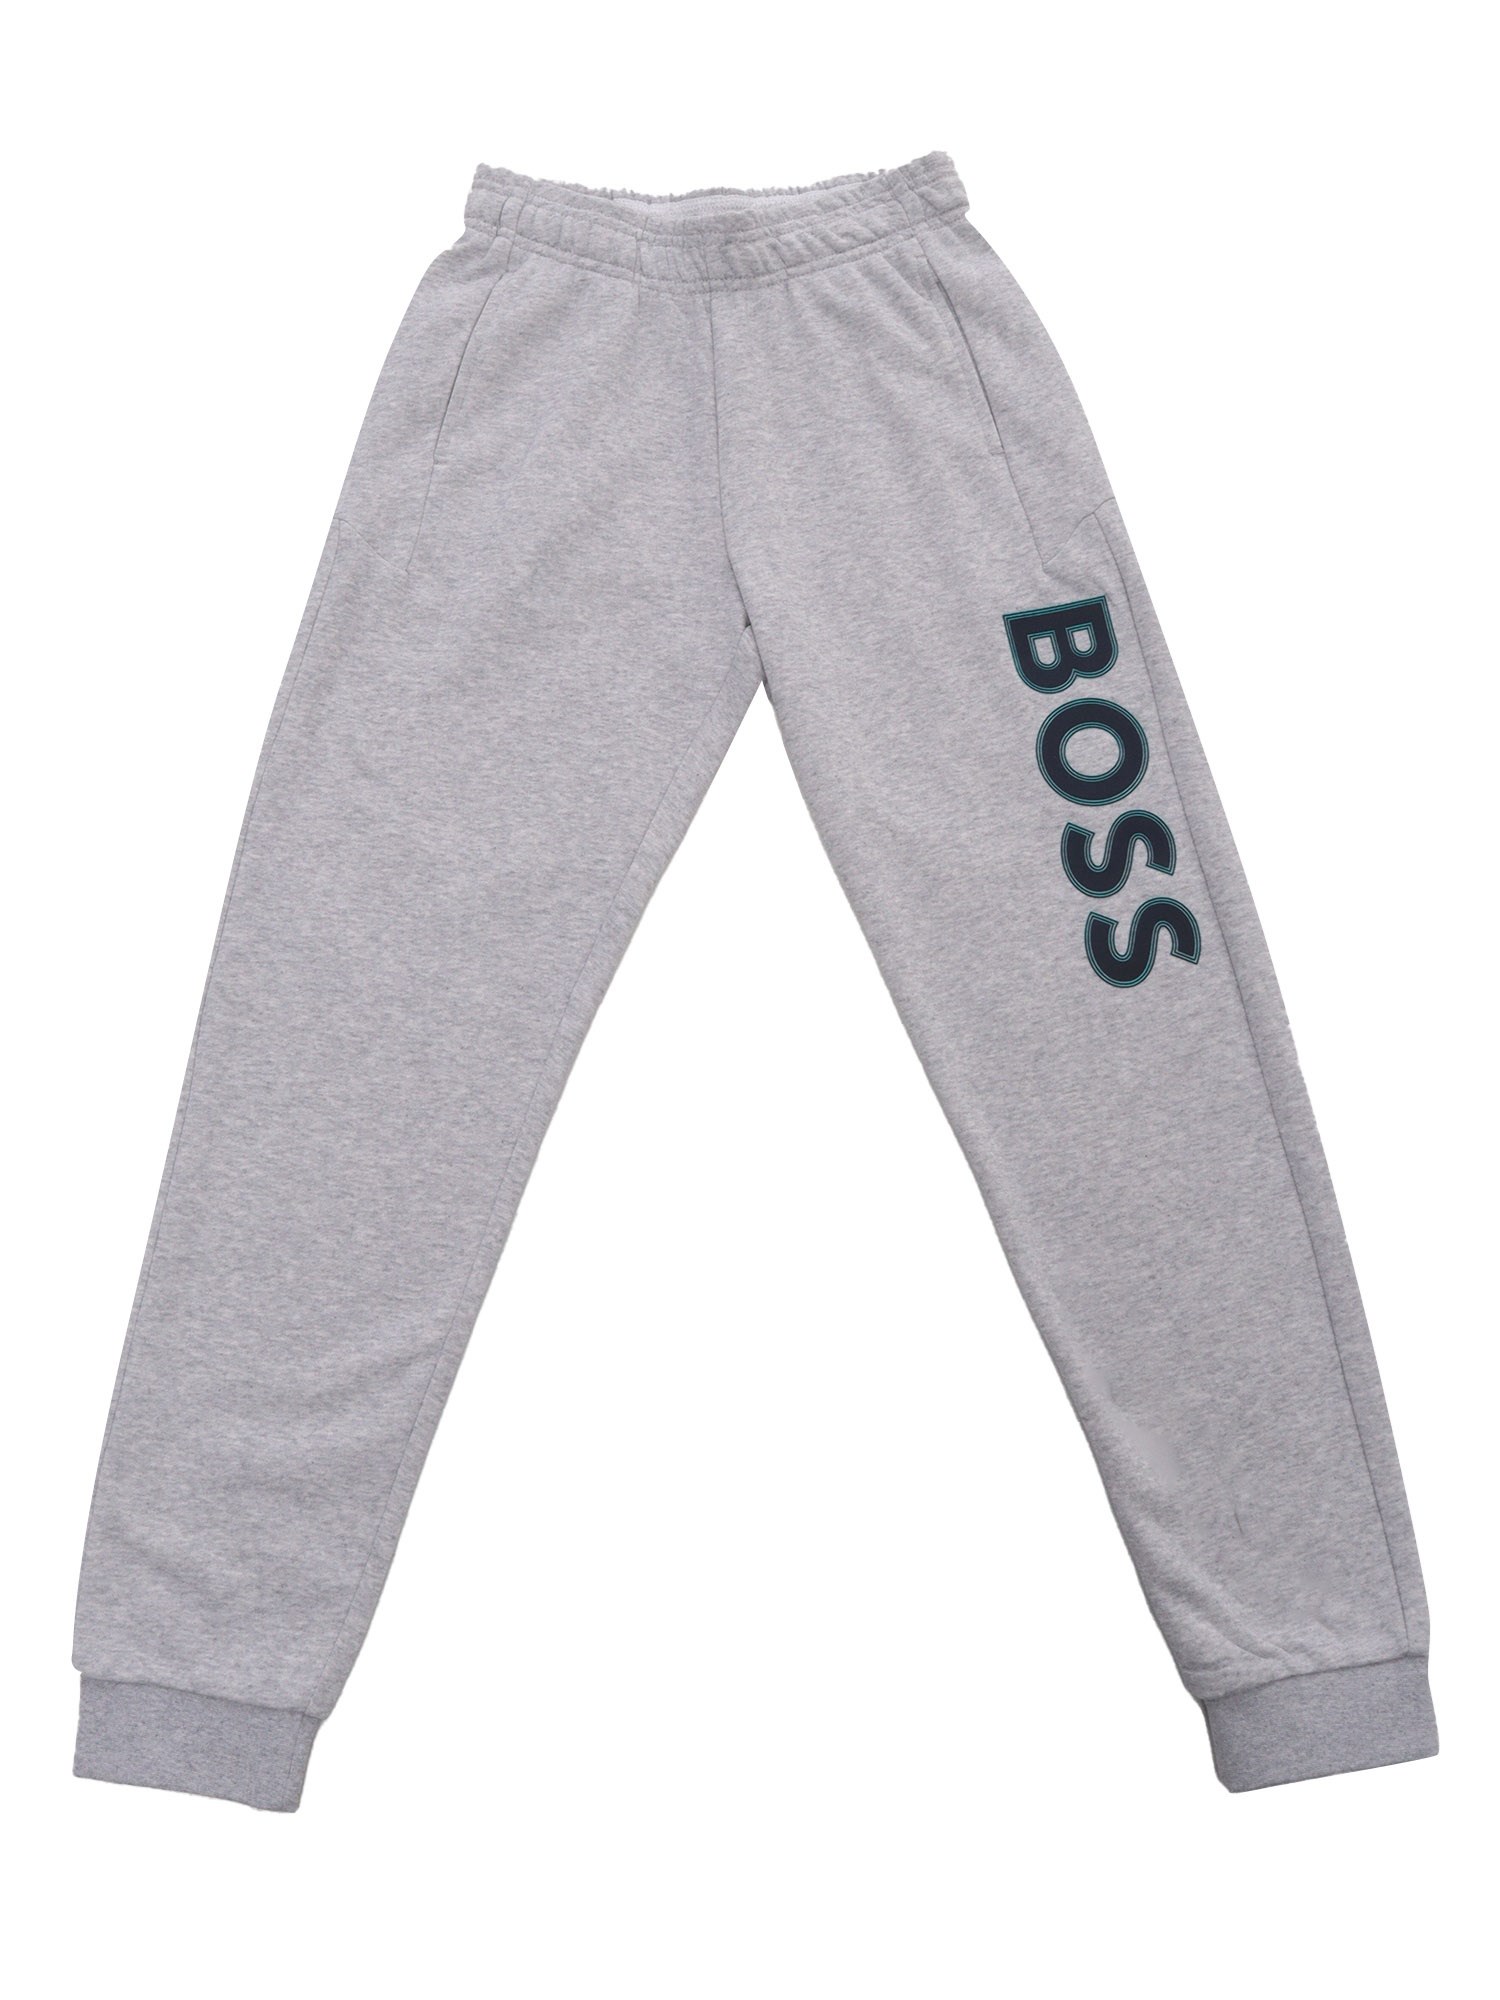 Hugo Boss Gray Jogging Pants